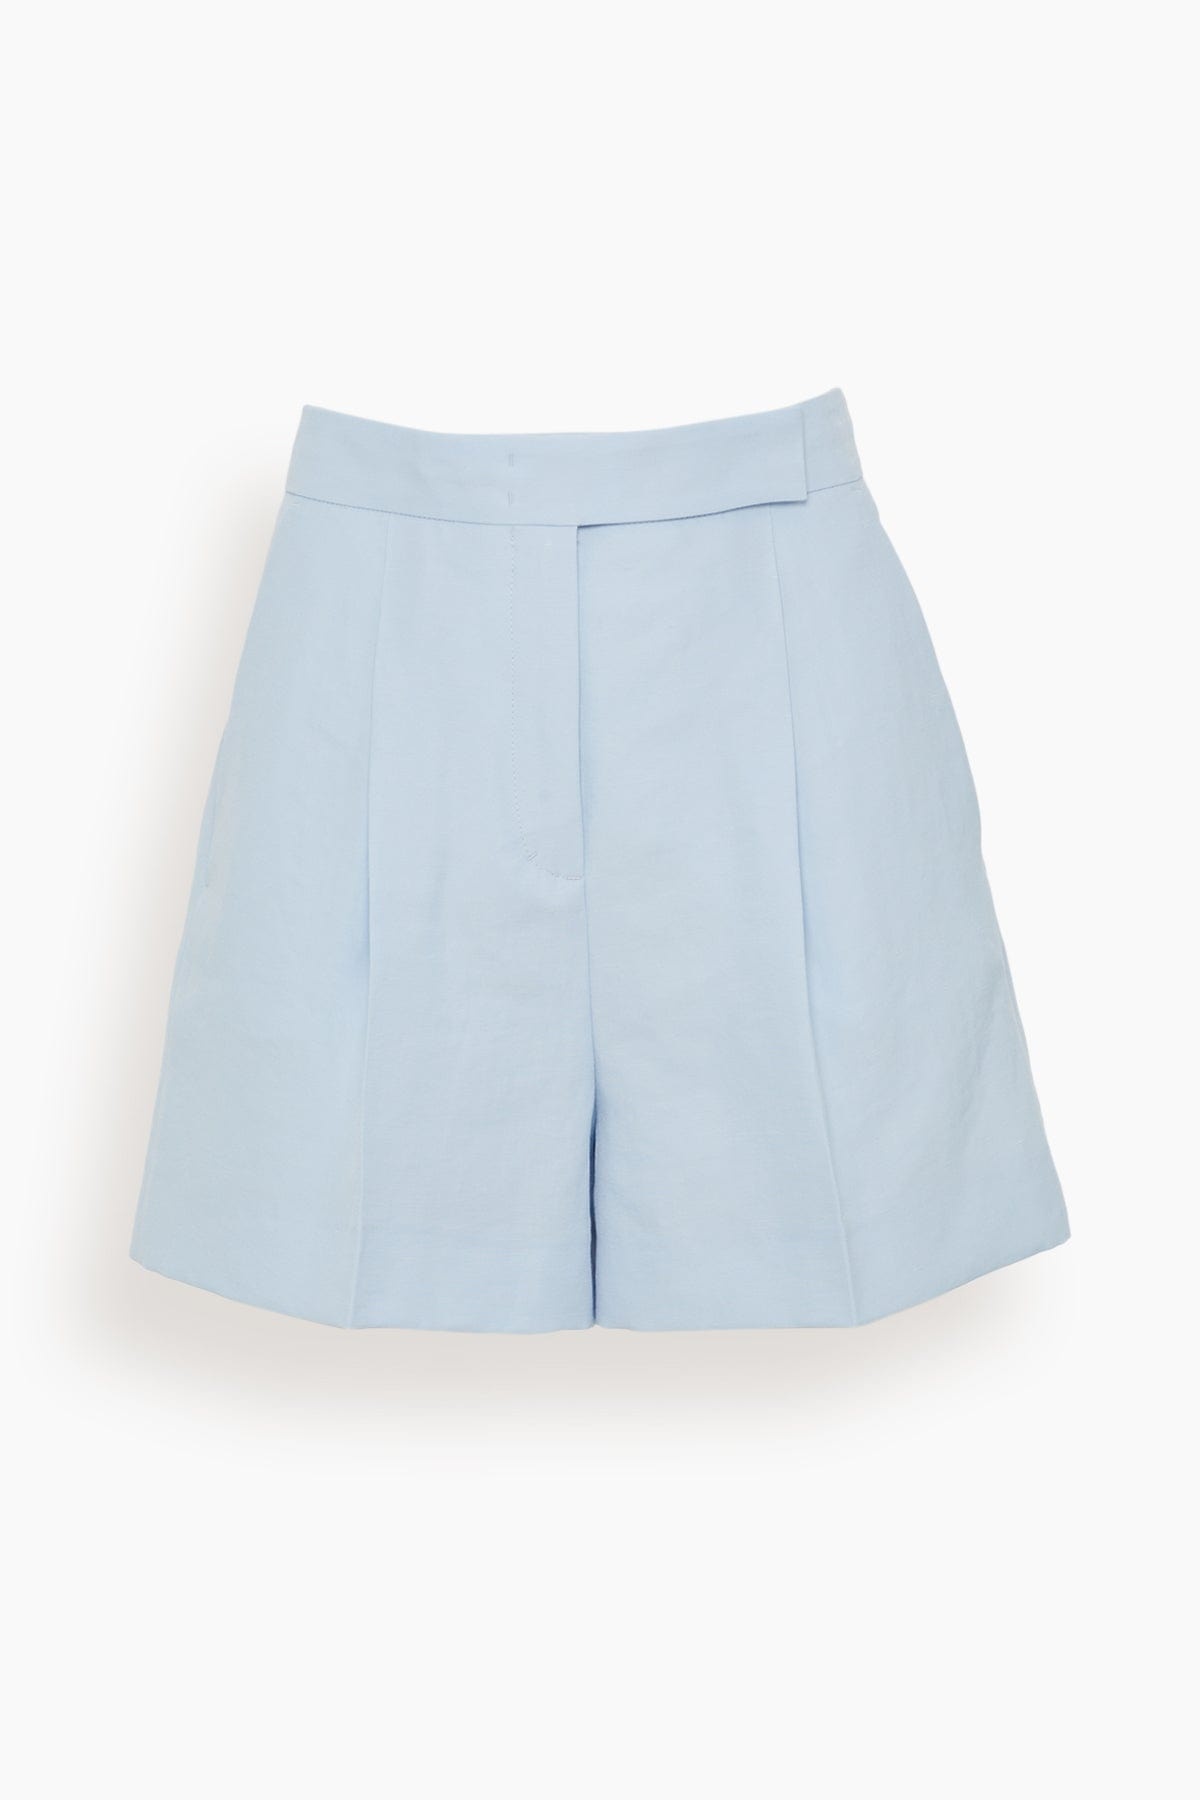 Summer Cruise Shorts in Soft Blue - 1